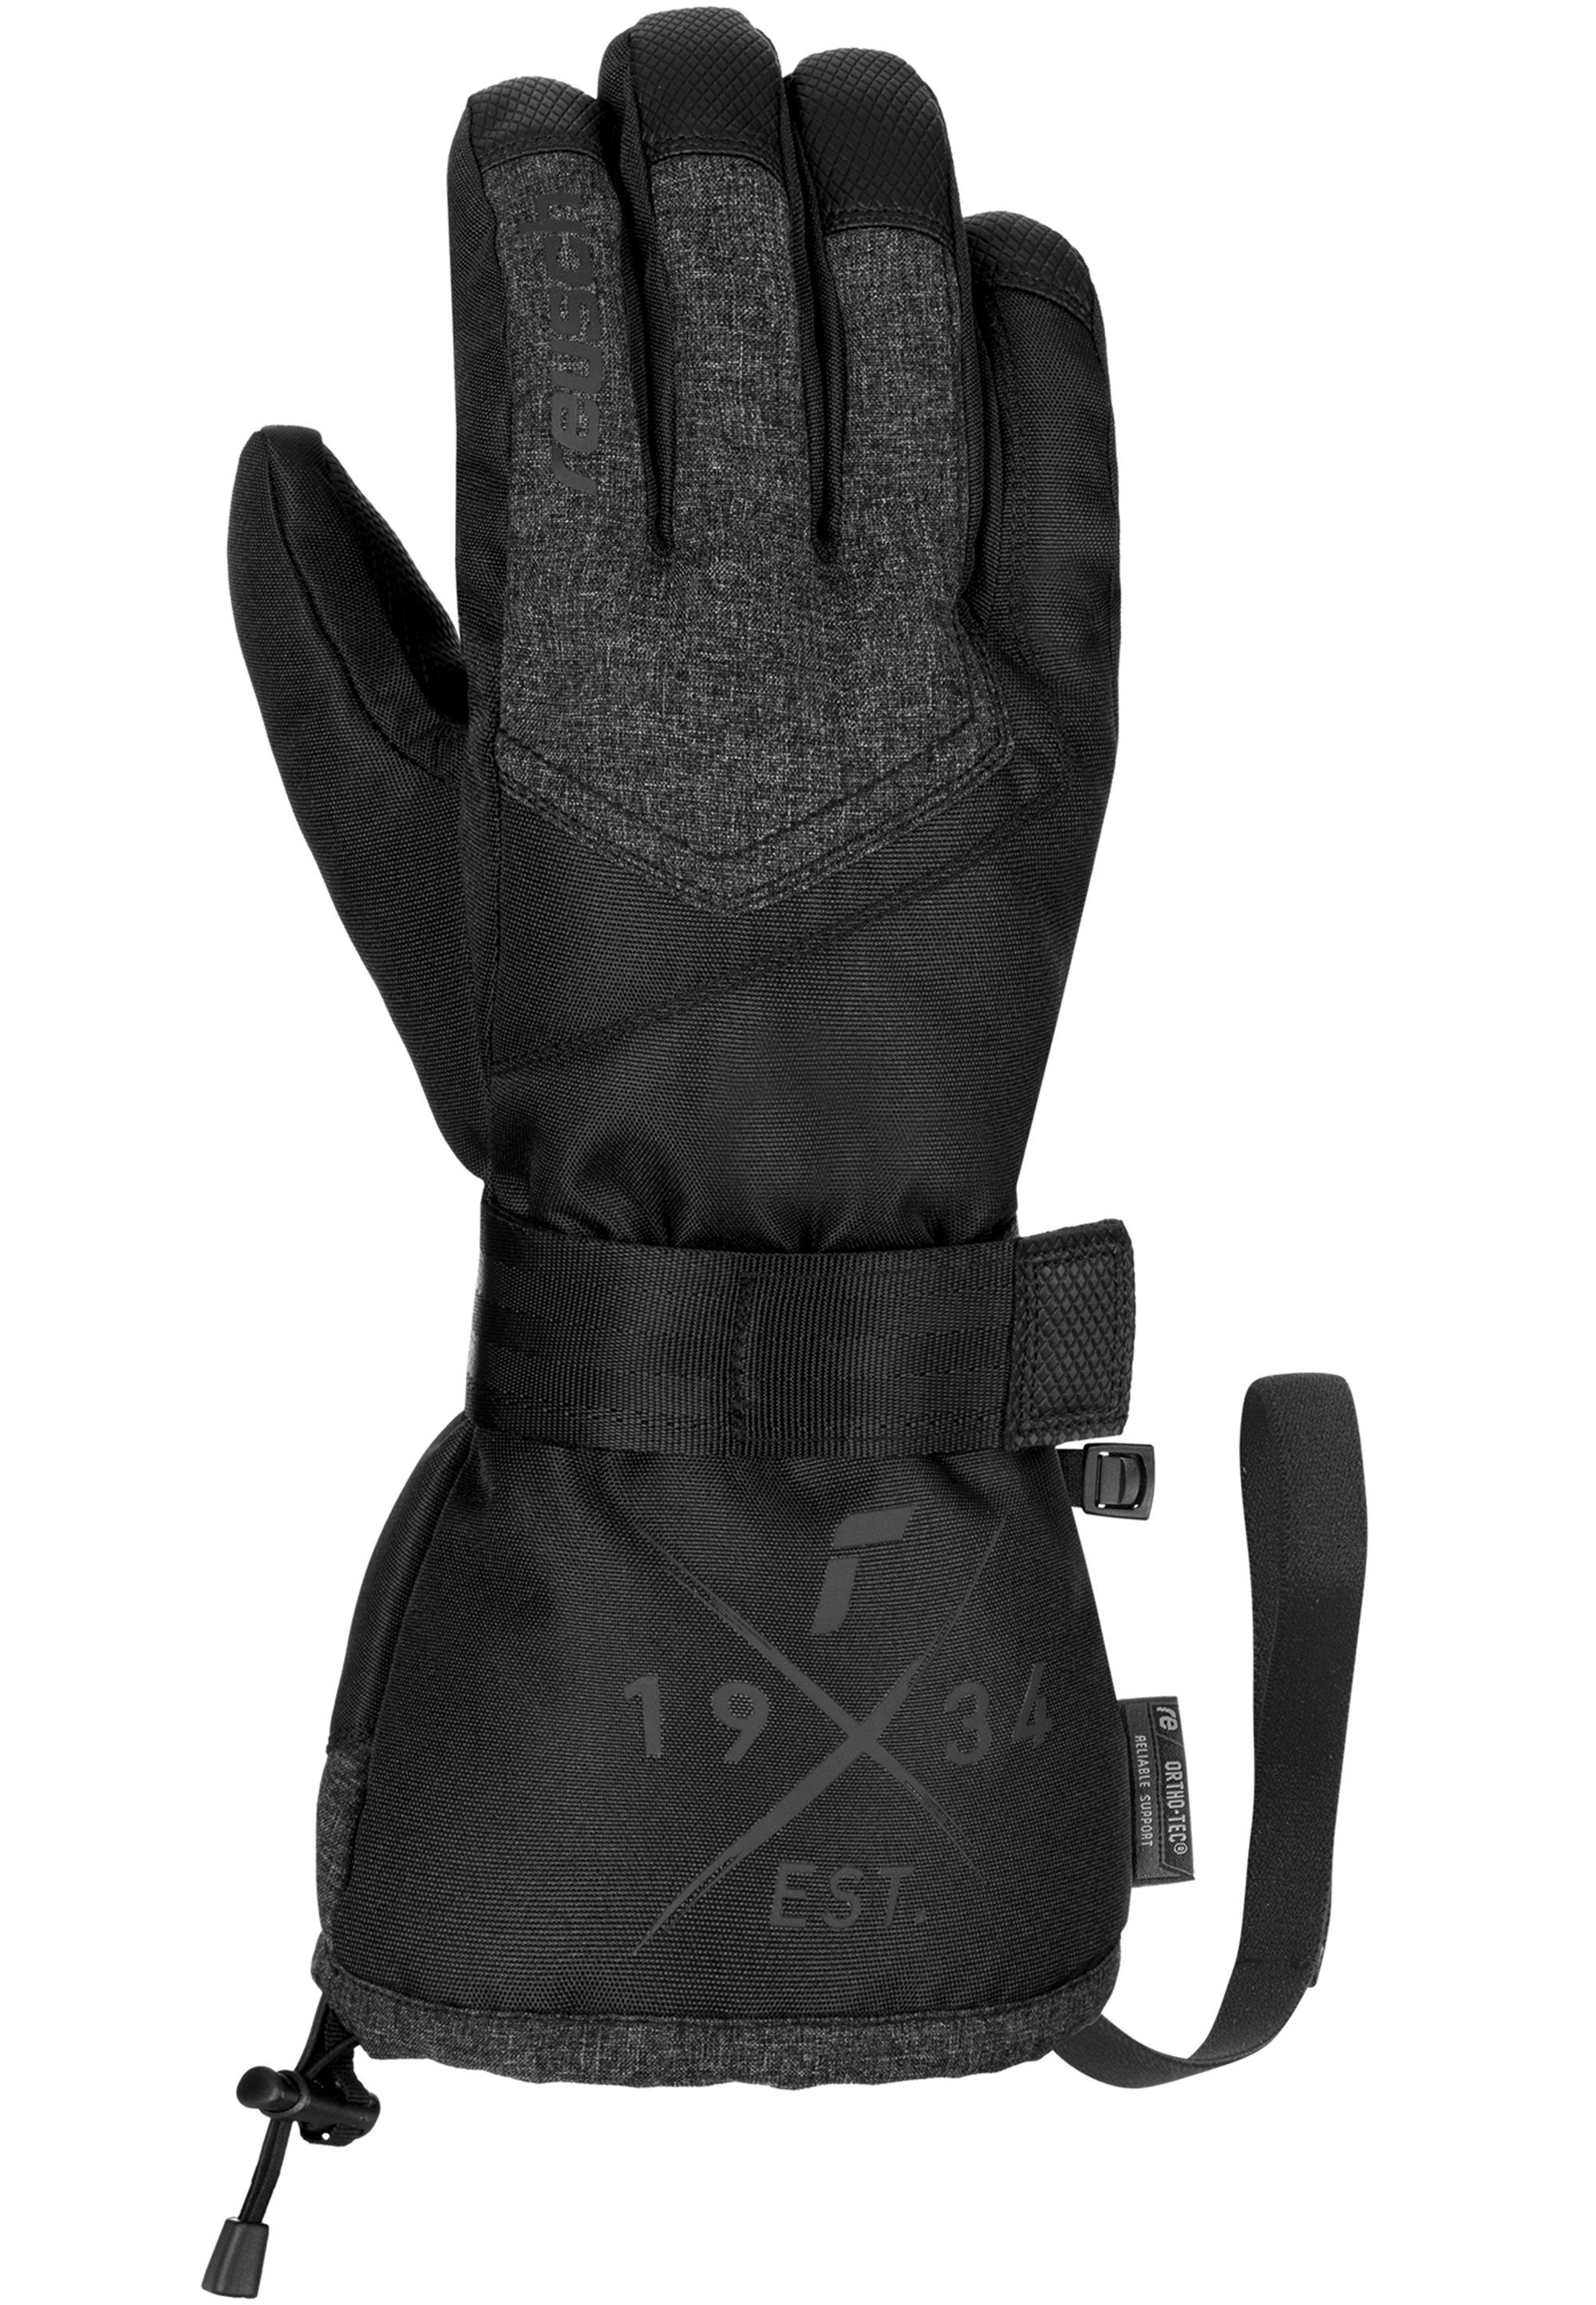 Skihandschuhe Ortho-Tec Reusch Baseplate XT Protection mit R-TEX®